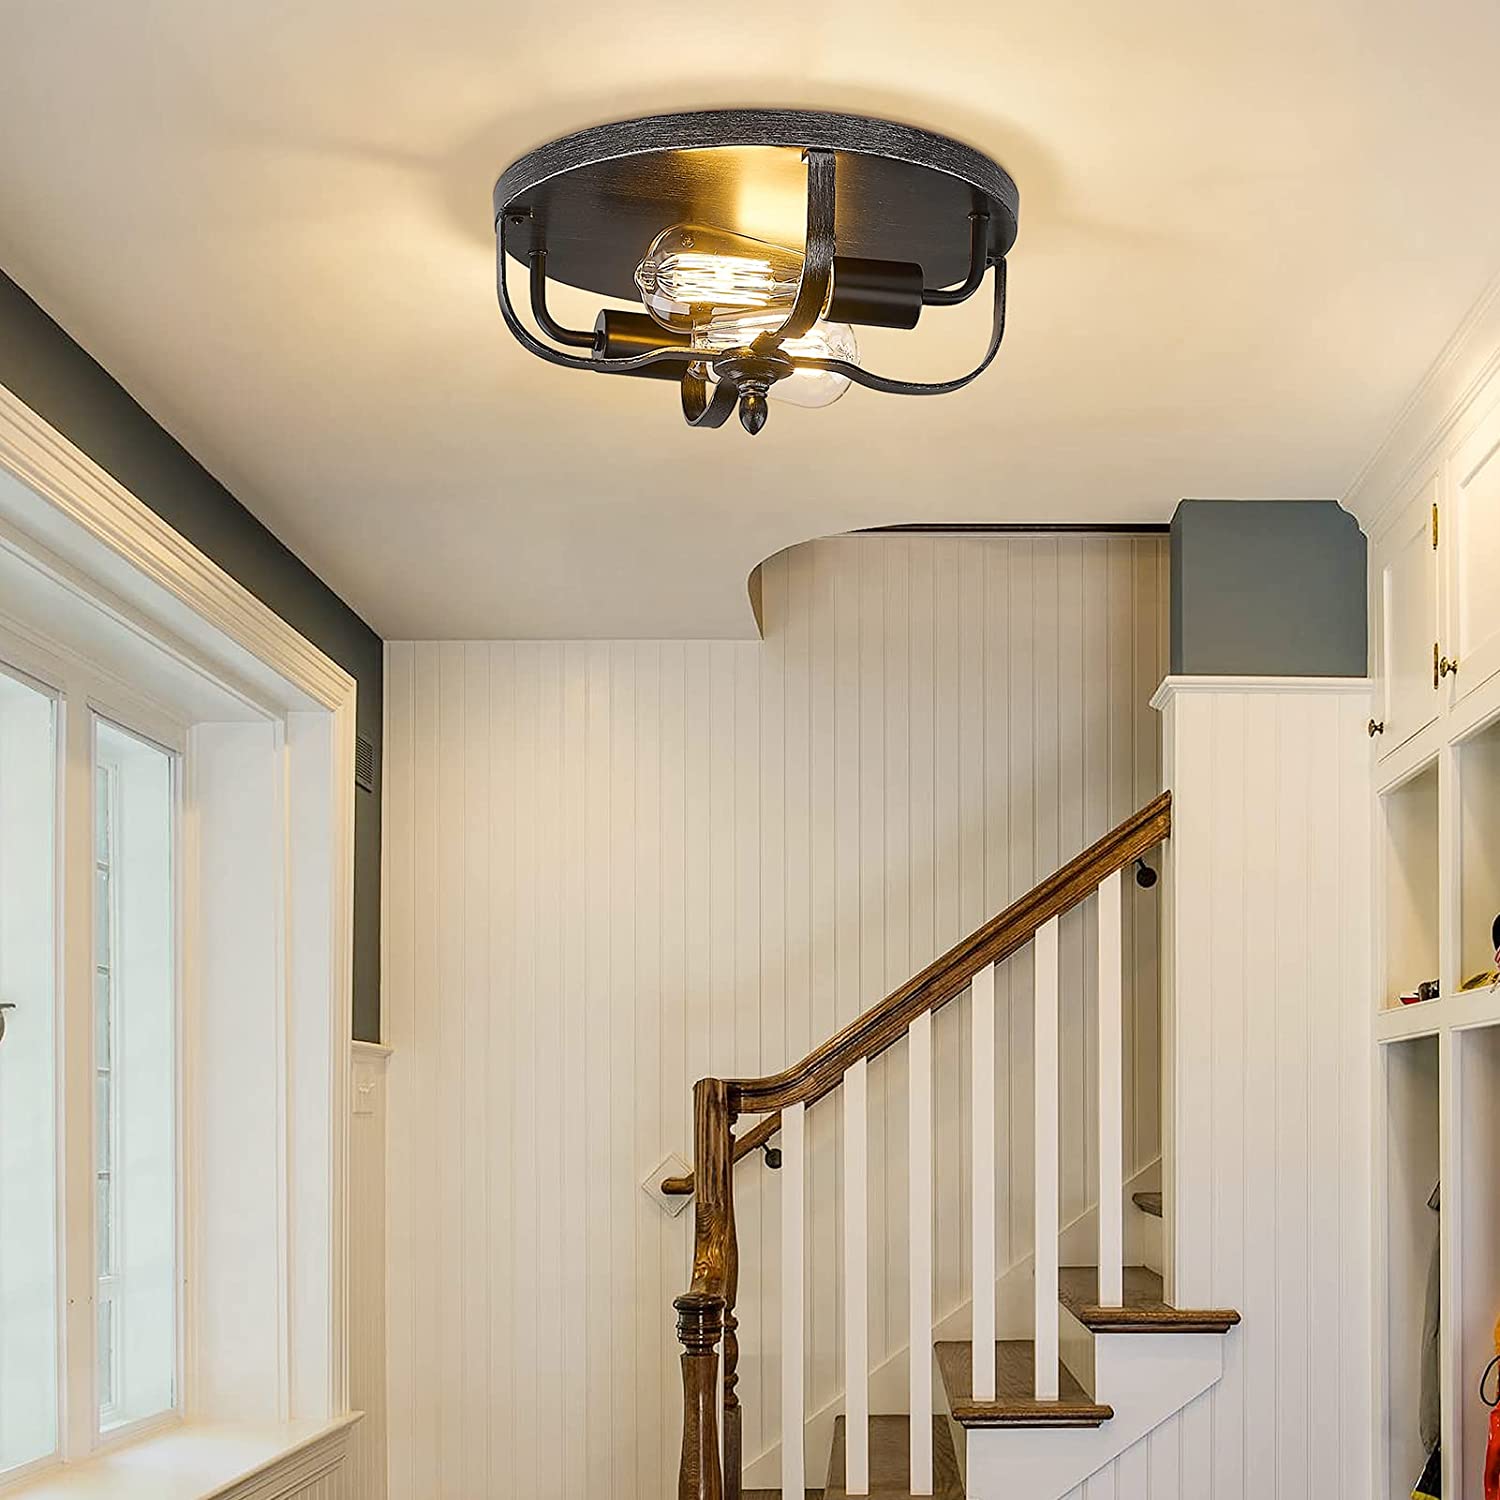 2 light vintage flush mount ceiling light industrial close to ceiling light fixture